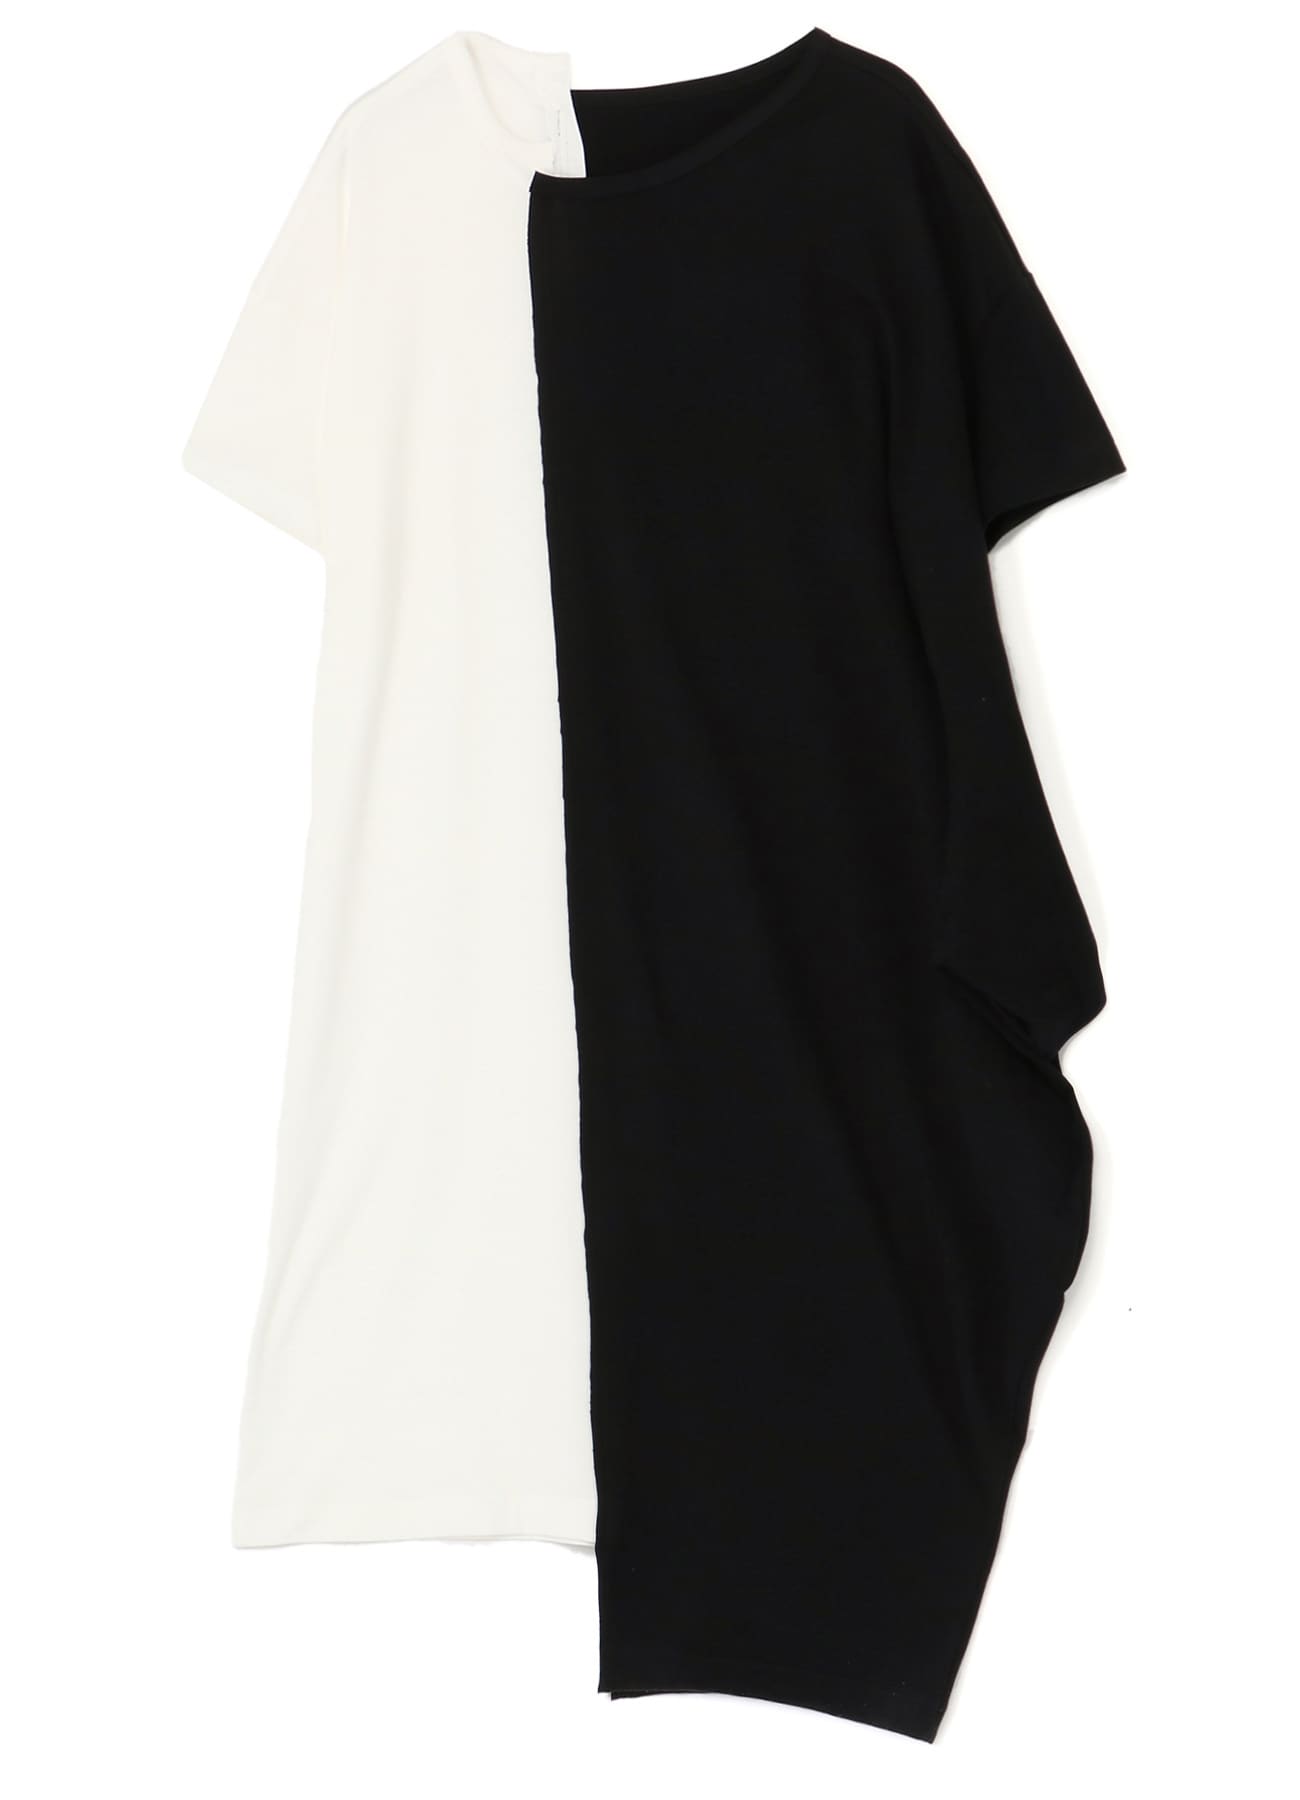 SOFT COTTON JERSEY UNEVEN CUT&SEW DRESS(S White x Black): Y's｜THE 